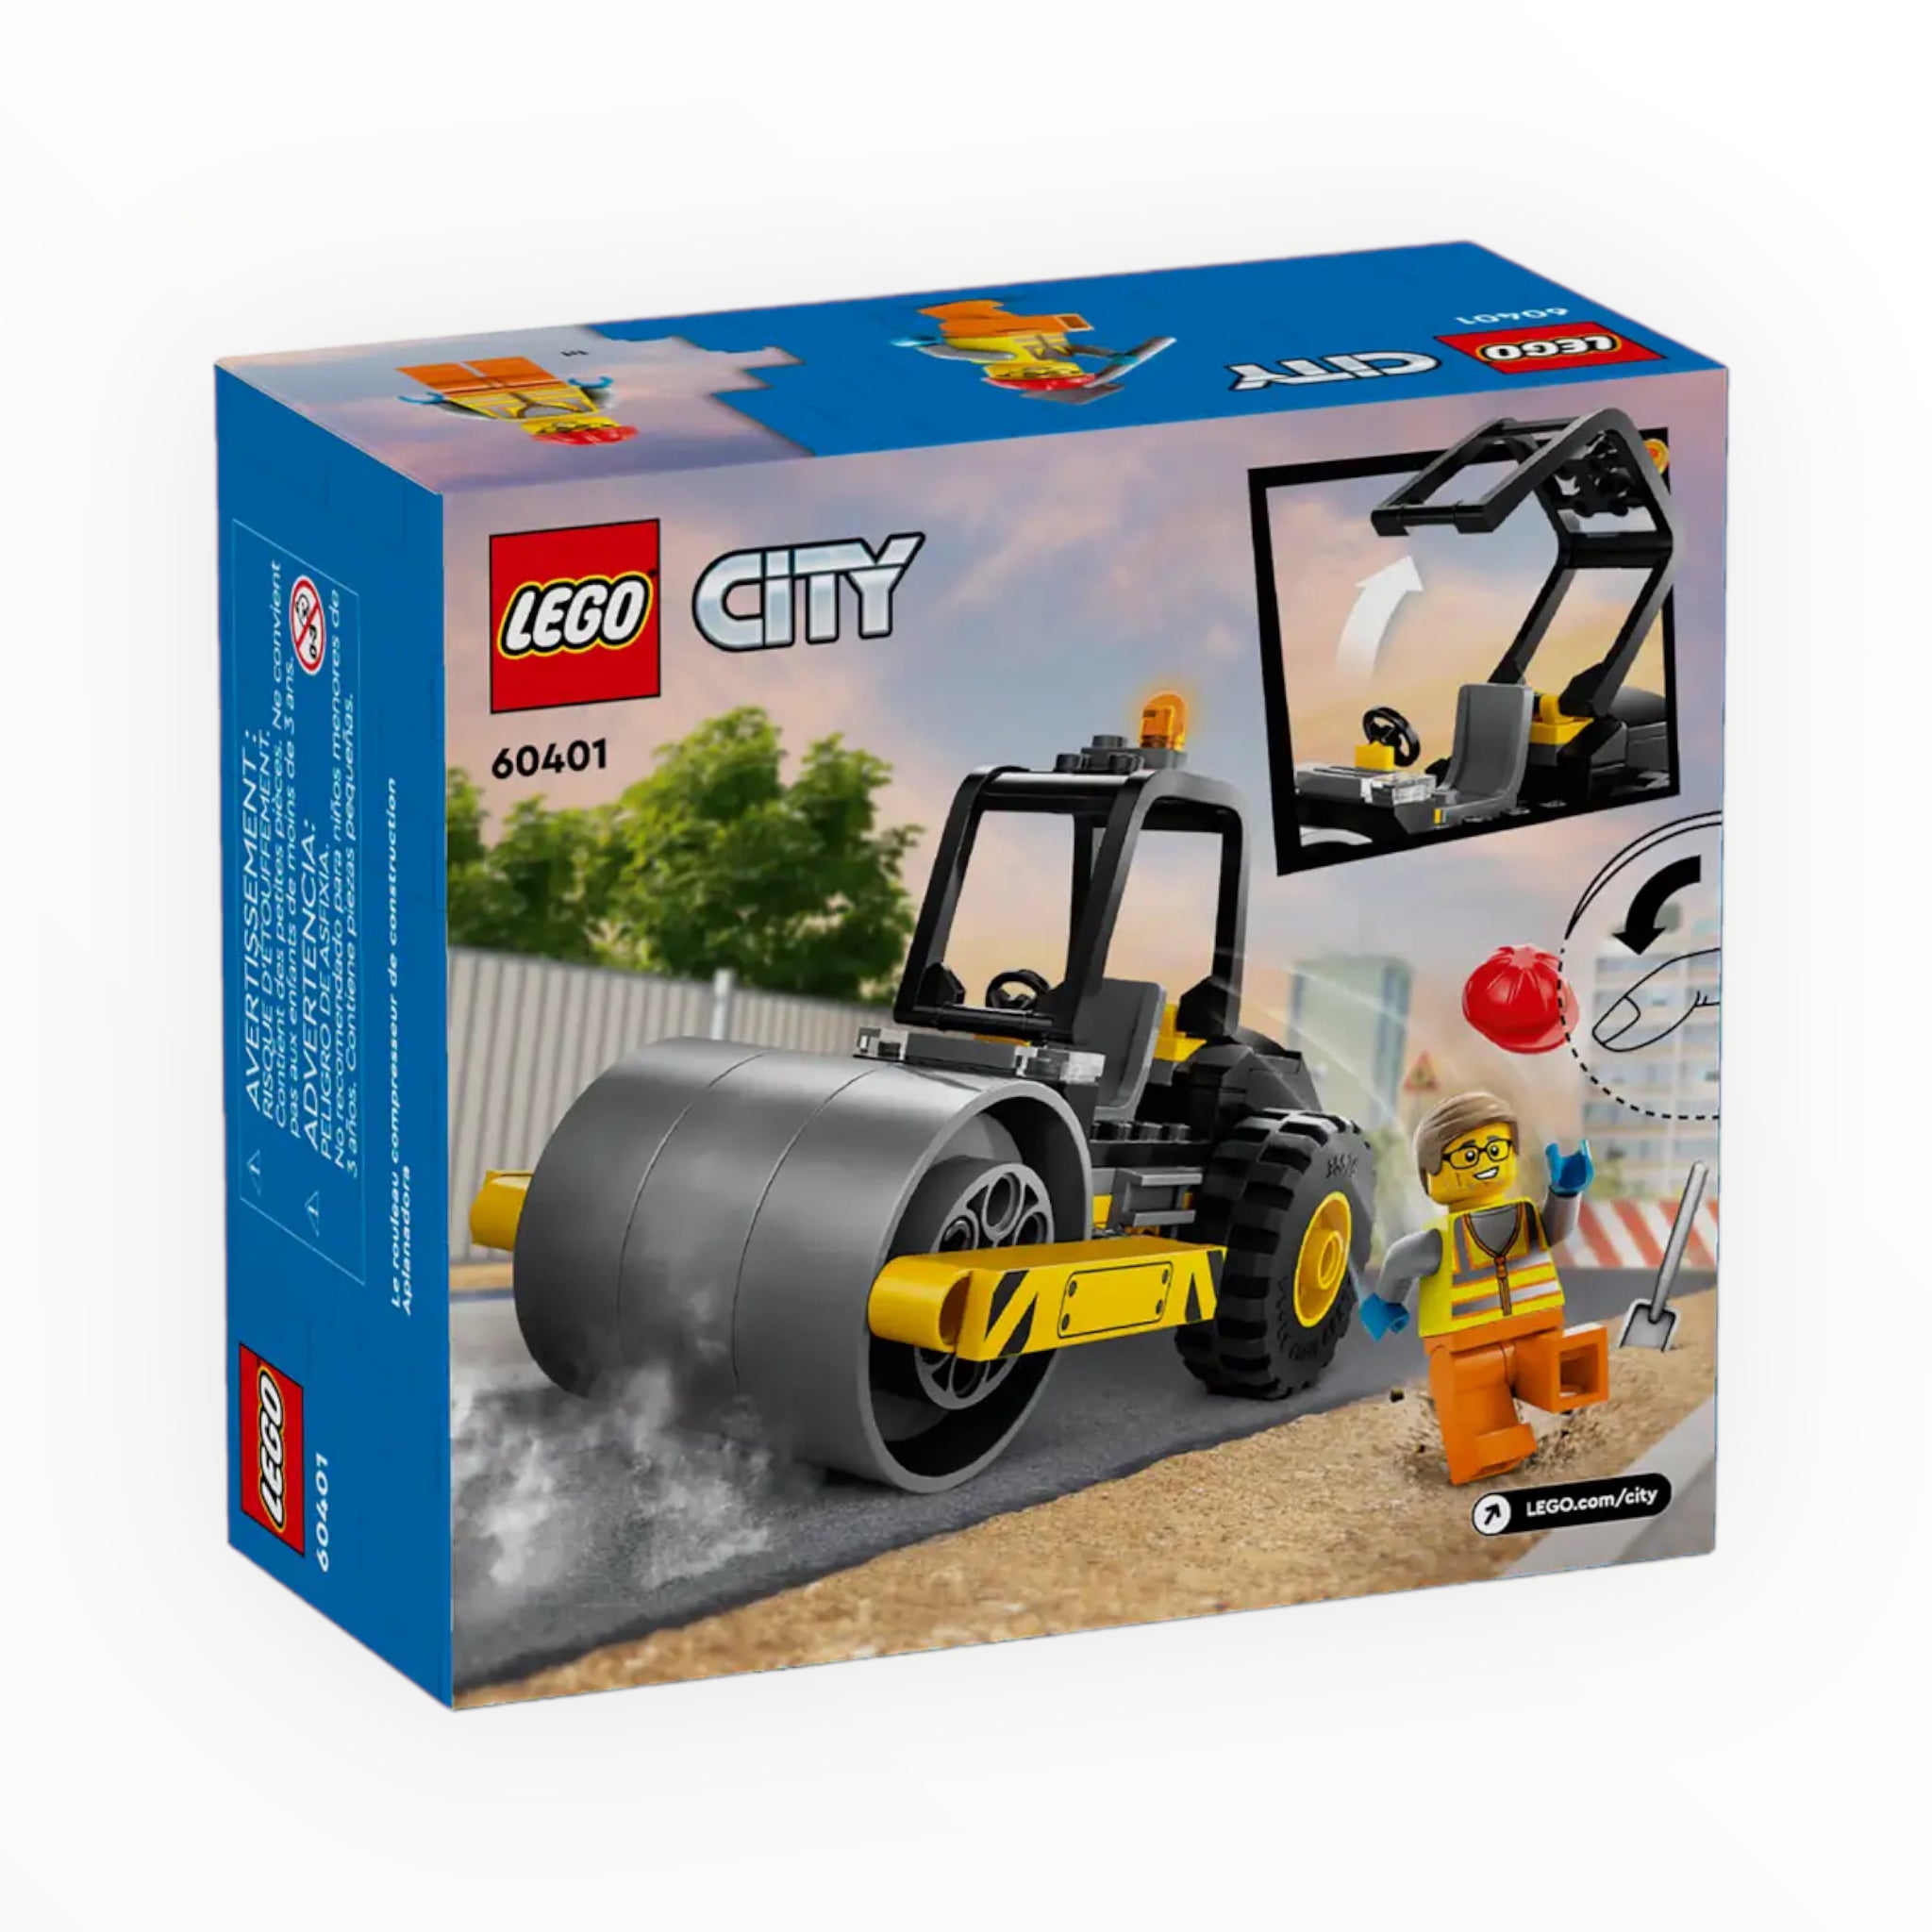 60401 City Construction Steamroller